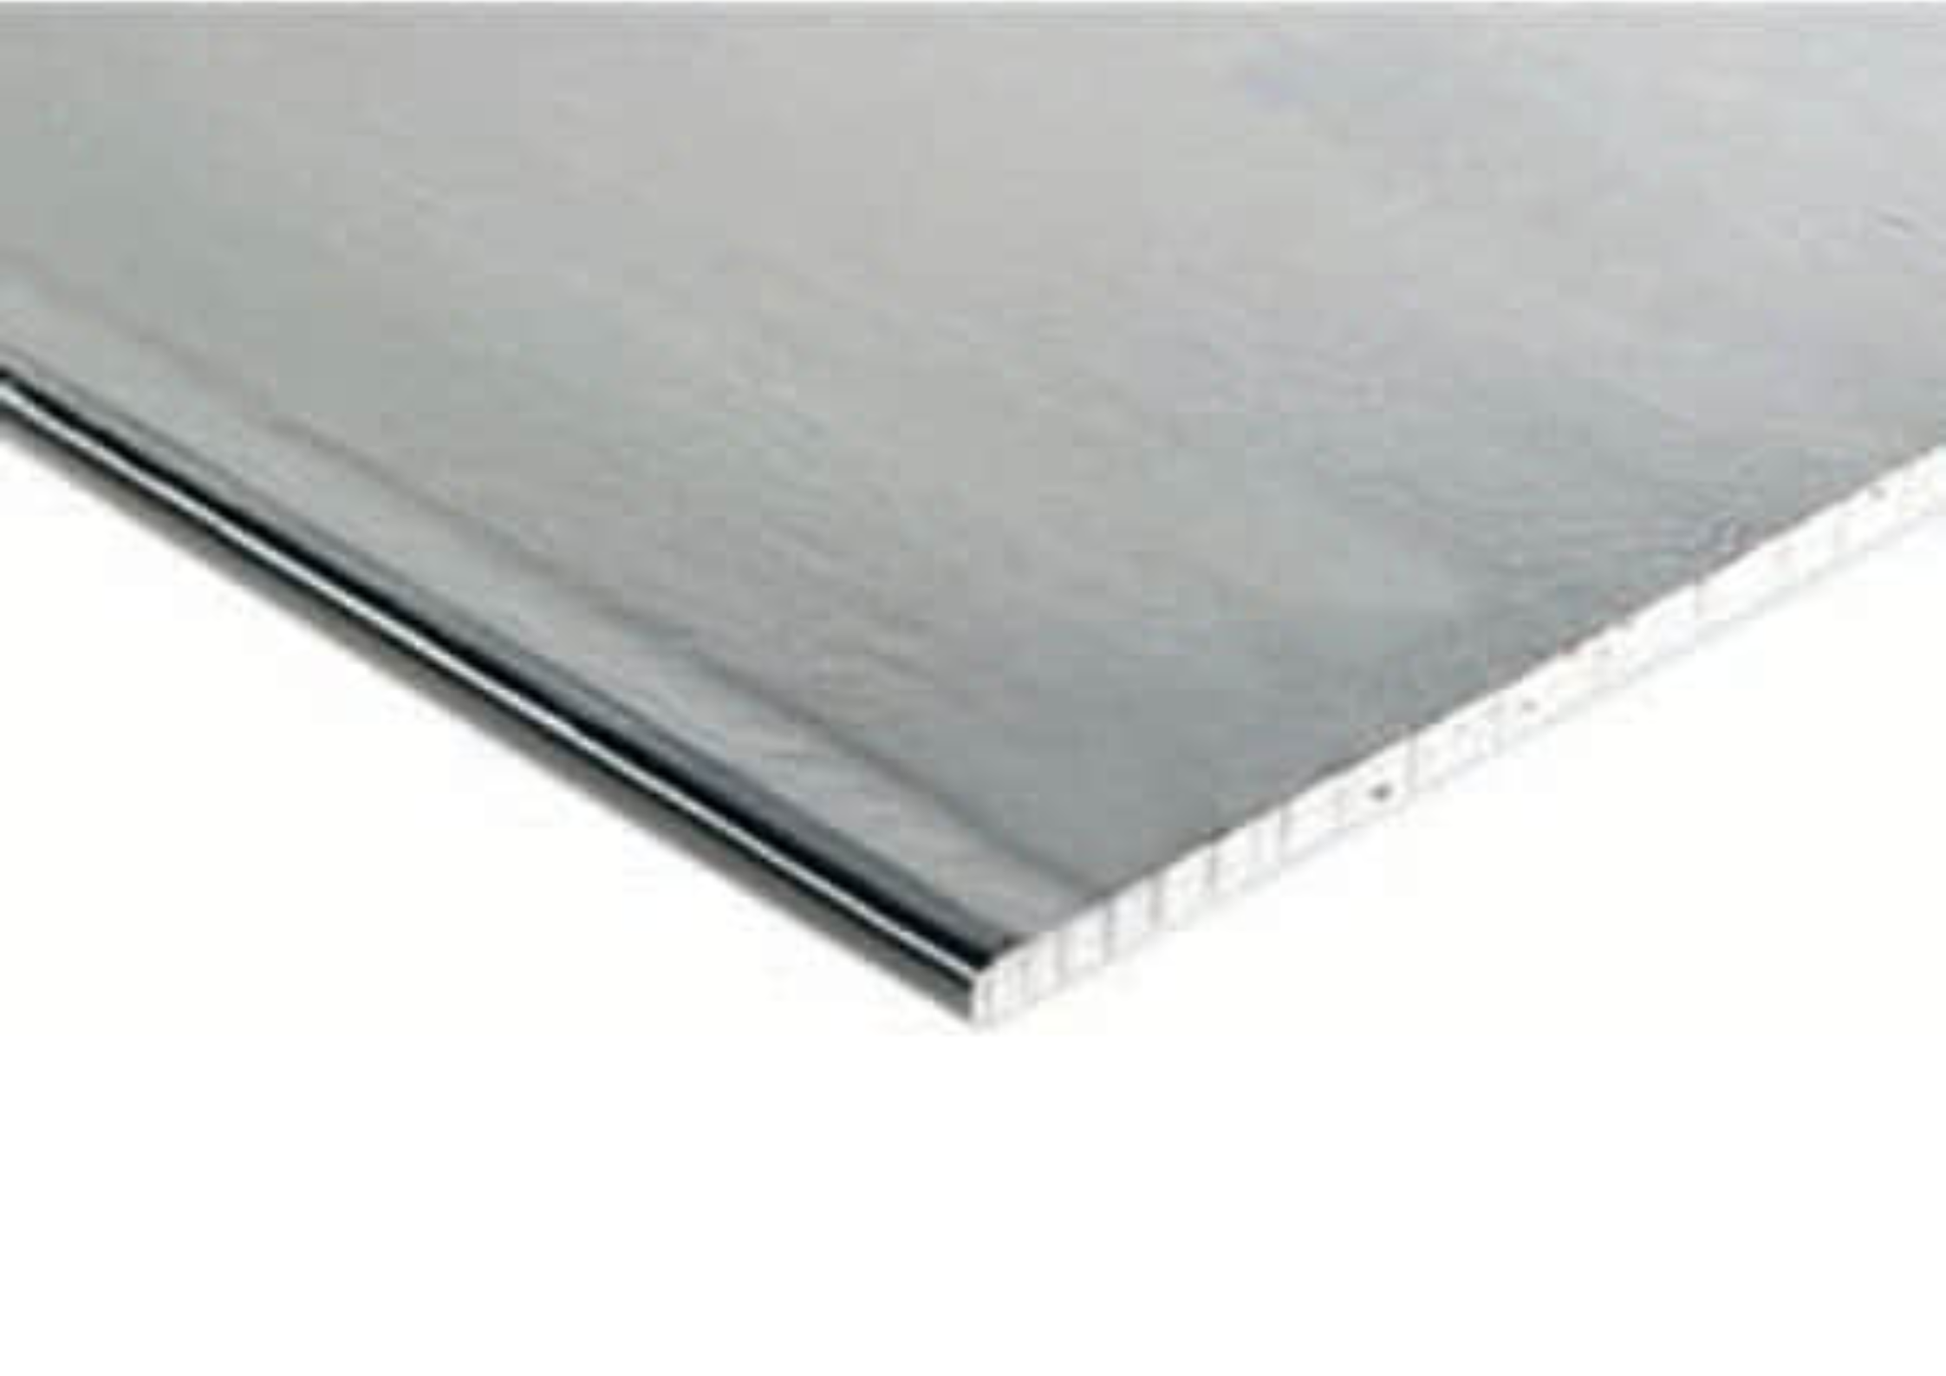 Knauf Knauf Vapour Panel Foil Backed Plasterboard - 2.4m x 1.2m x 12.5mm